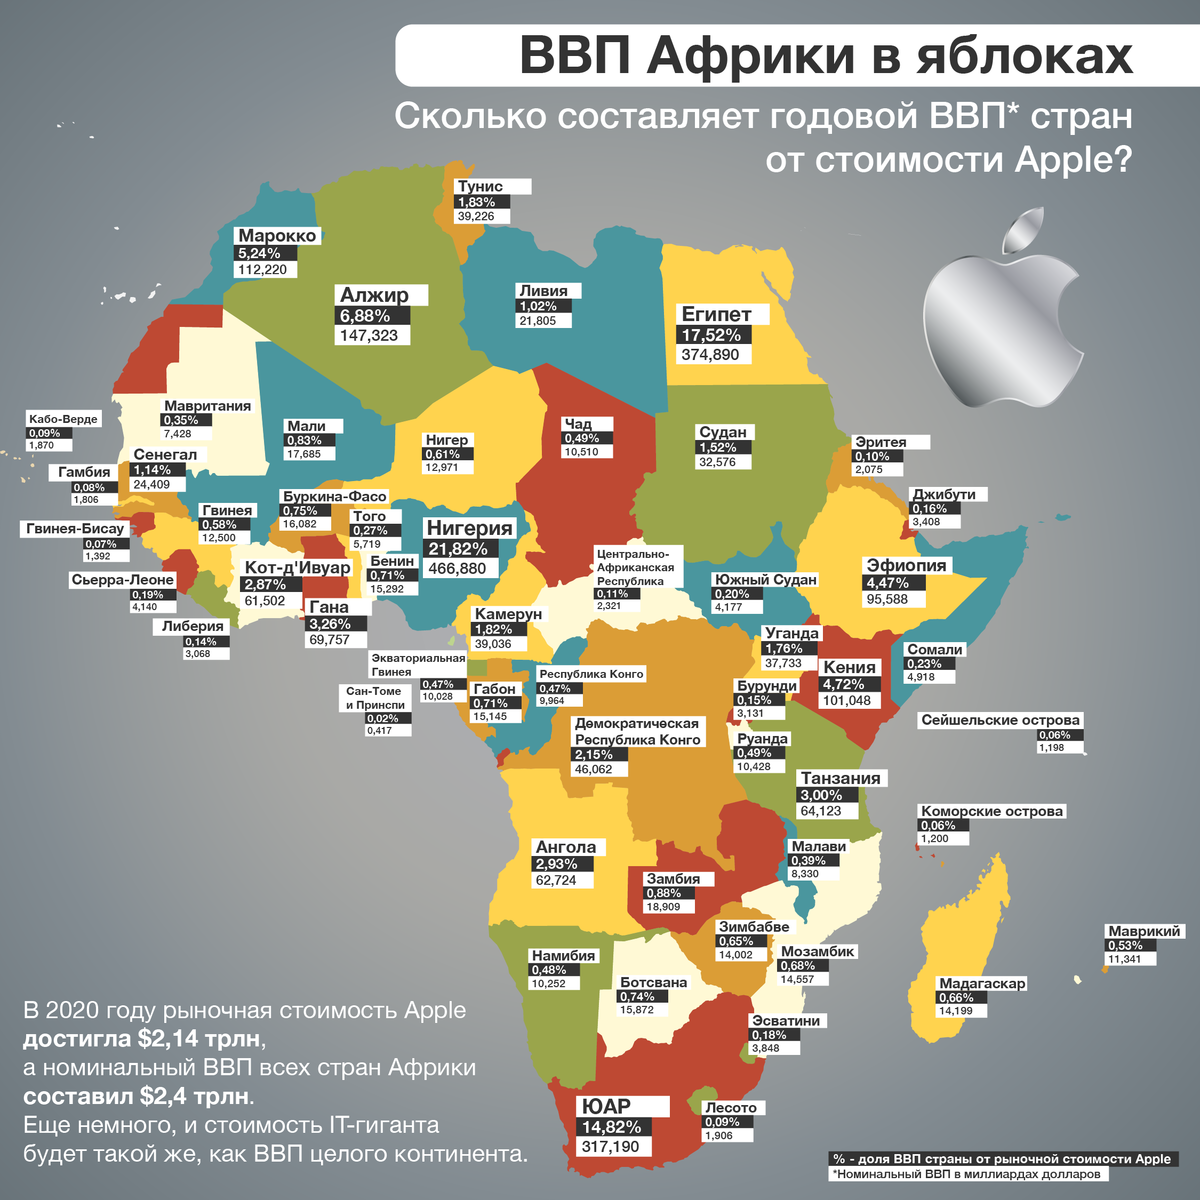 ВВП стран Африки. Страны Африки по ВВП. Африканские страны на карте. ВВП африканских стран 2020.